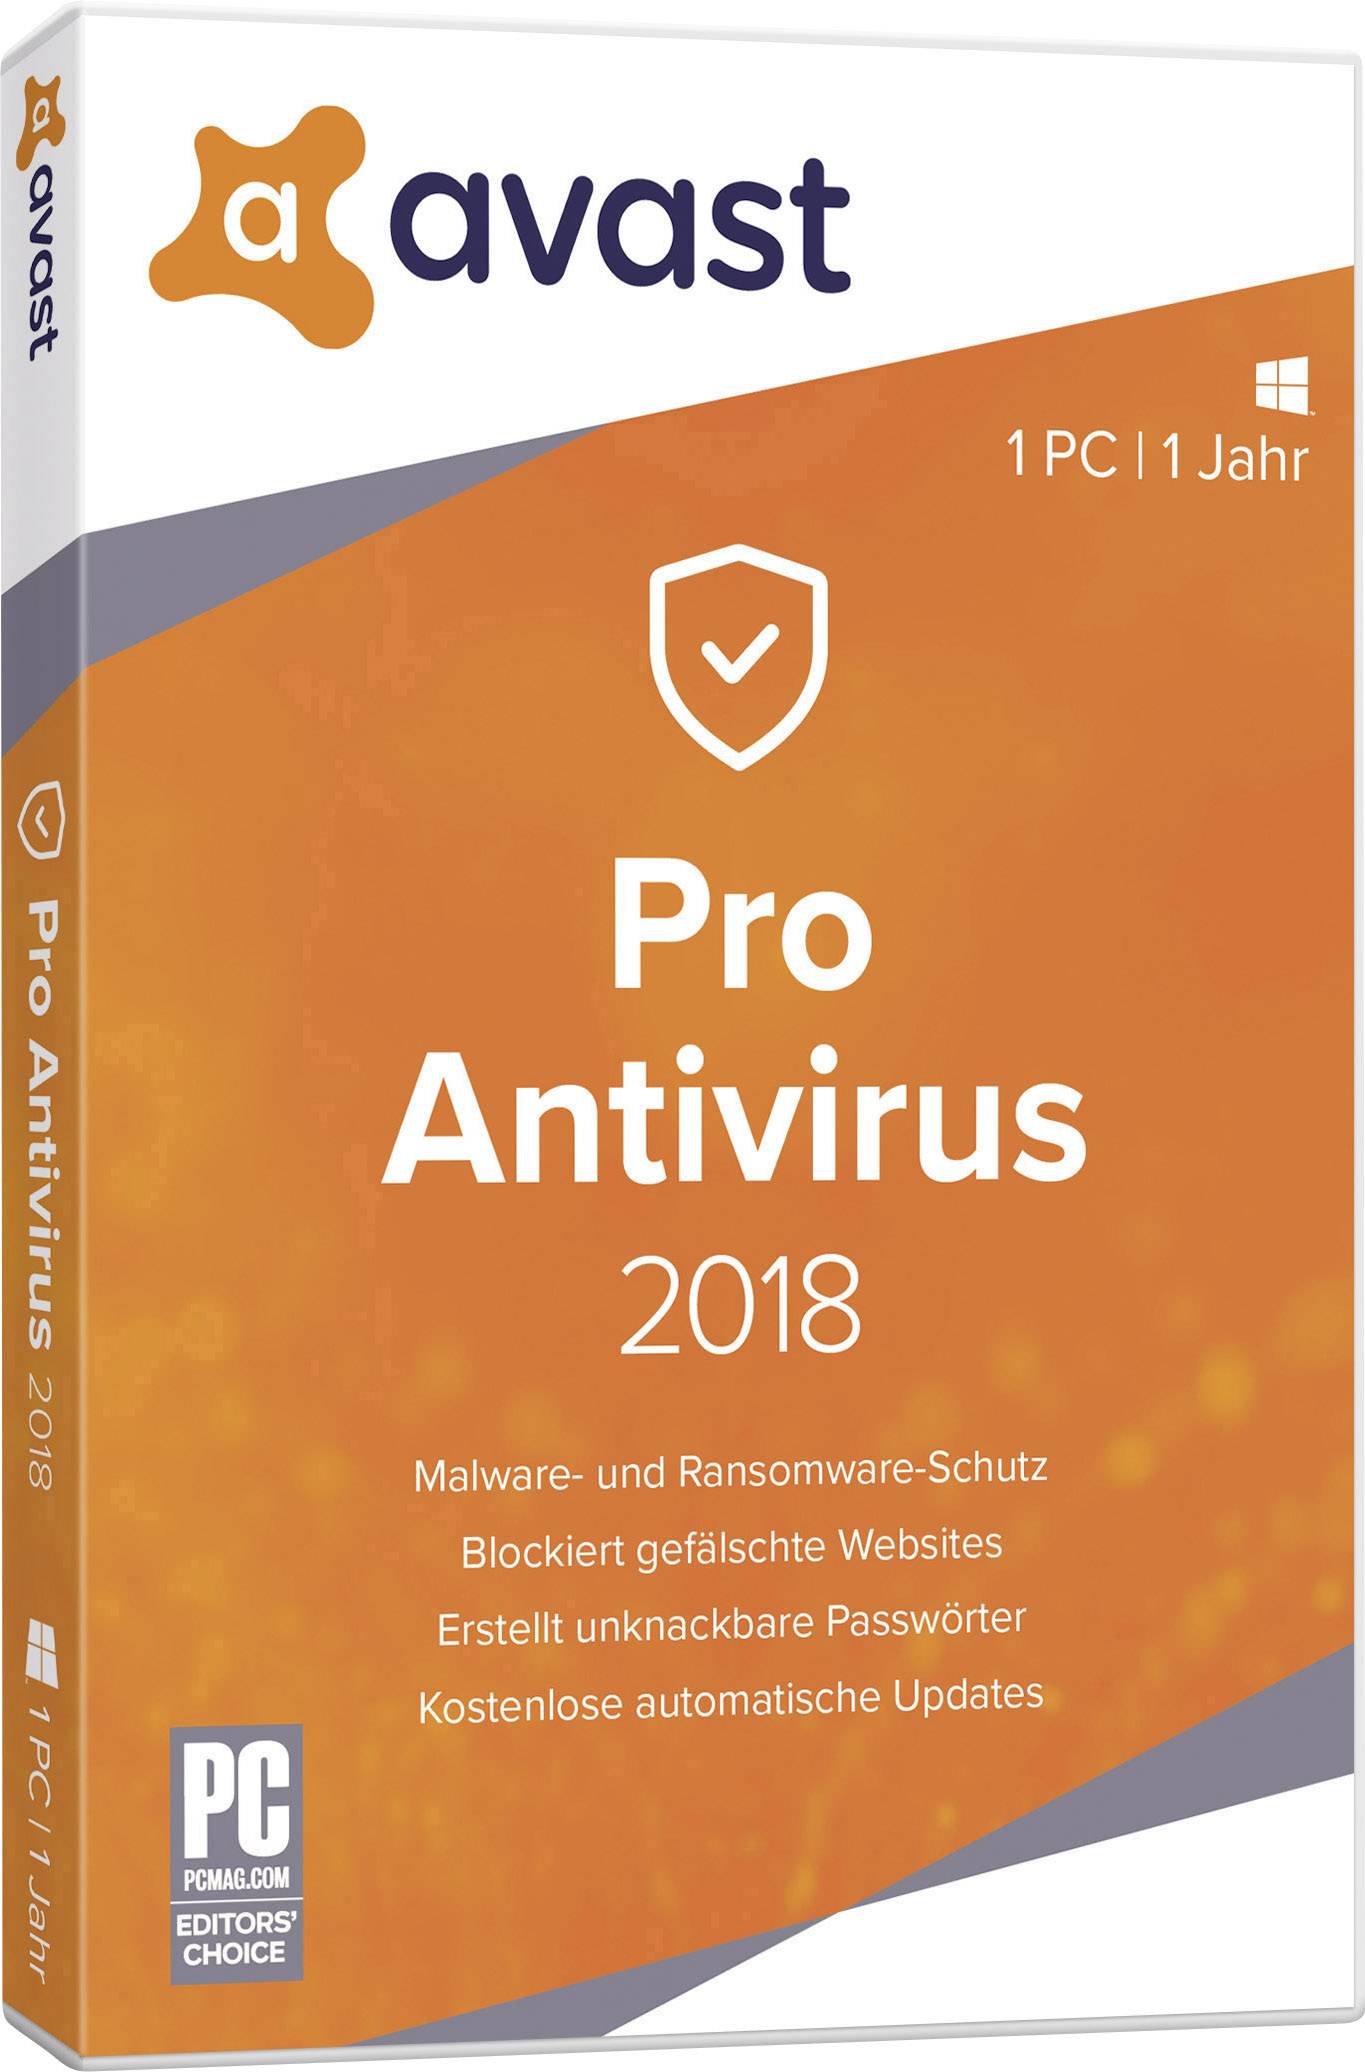 avast antivirus free download 2018